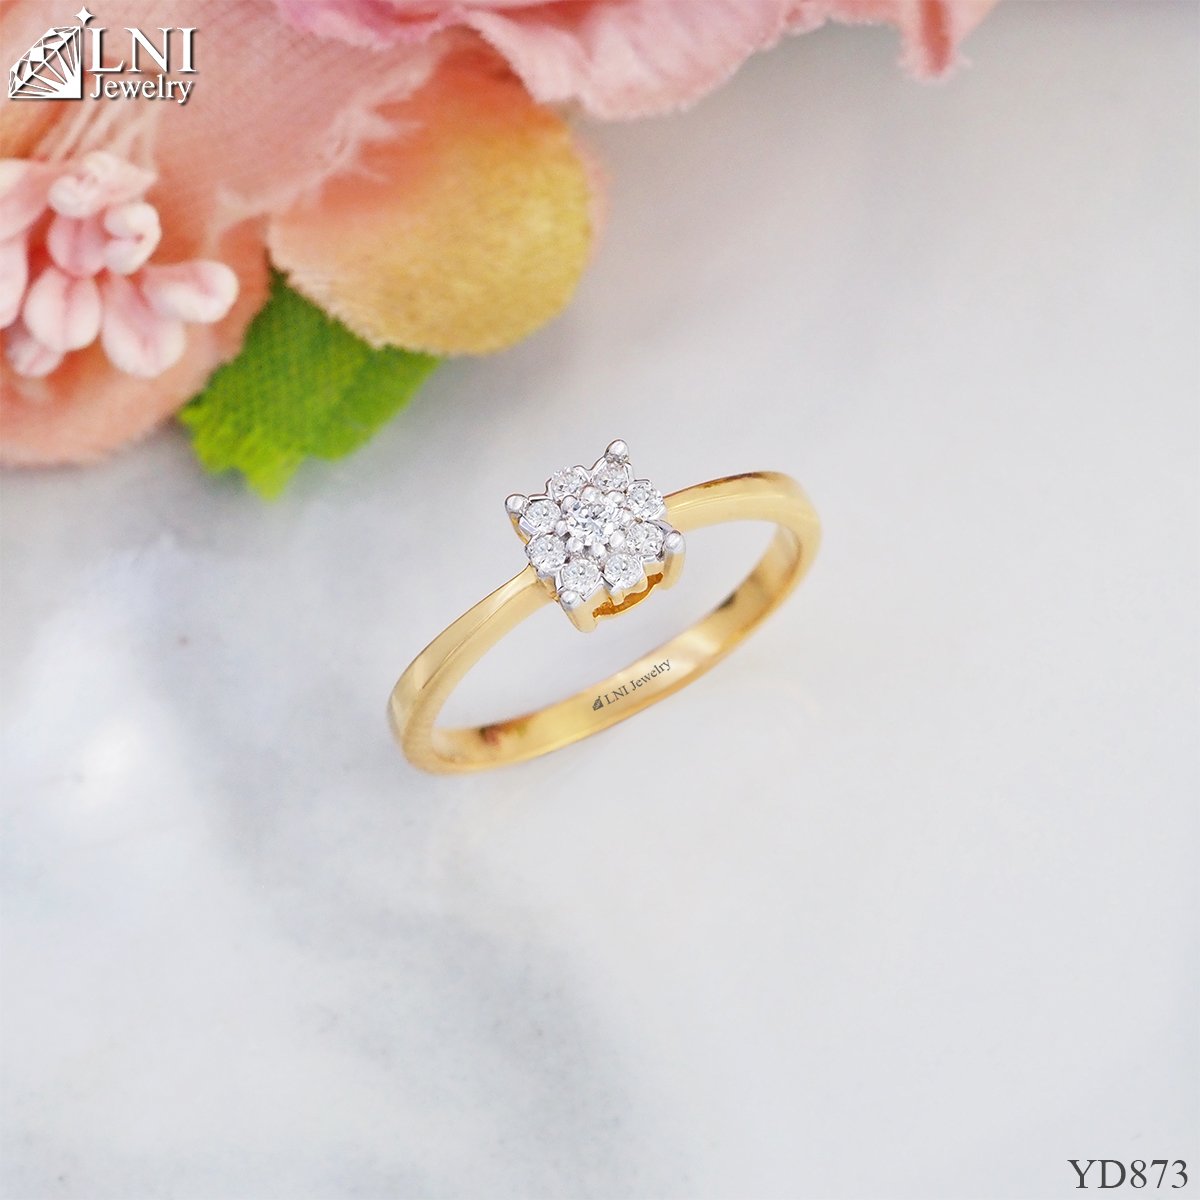 YD873 Diamond Ring